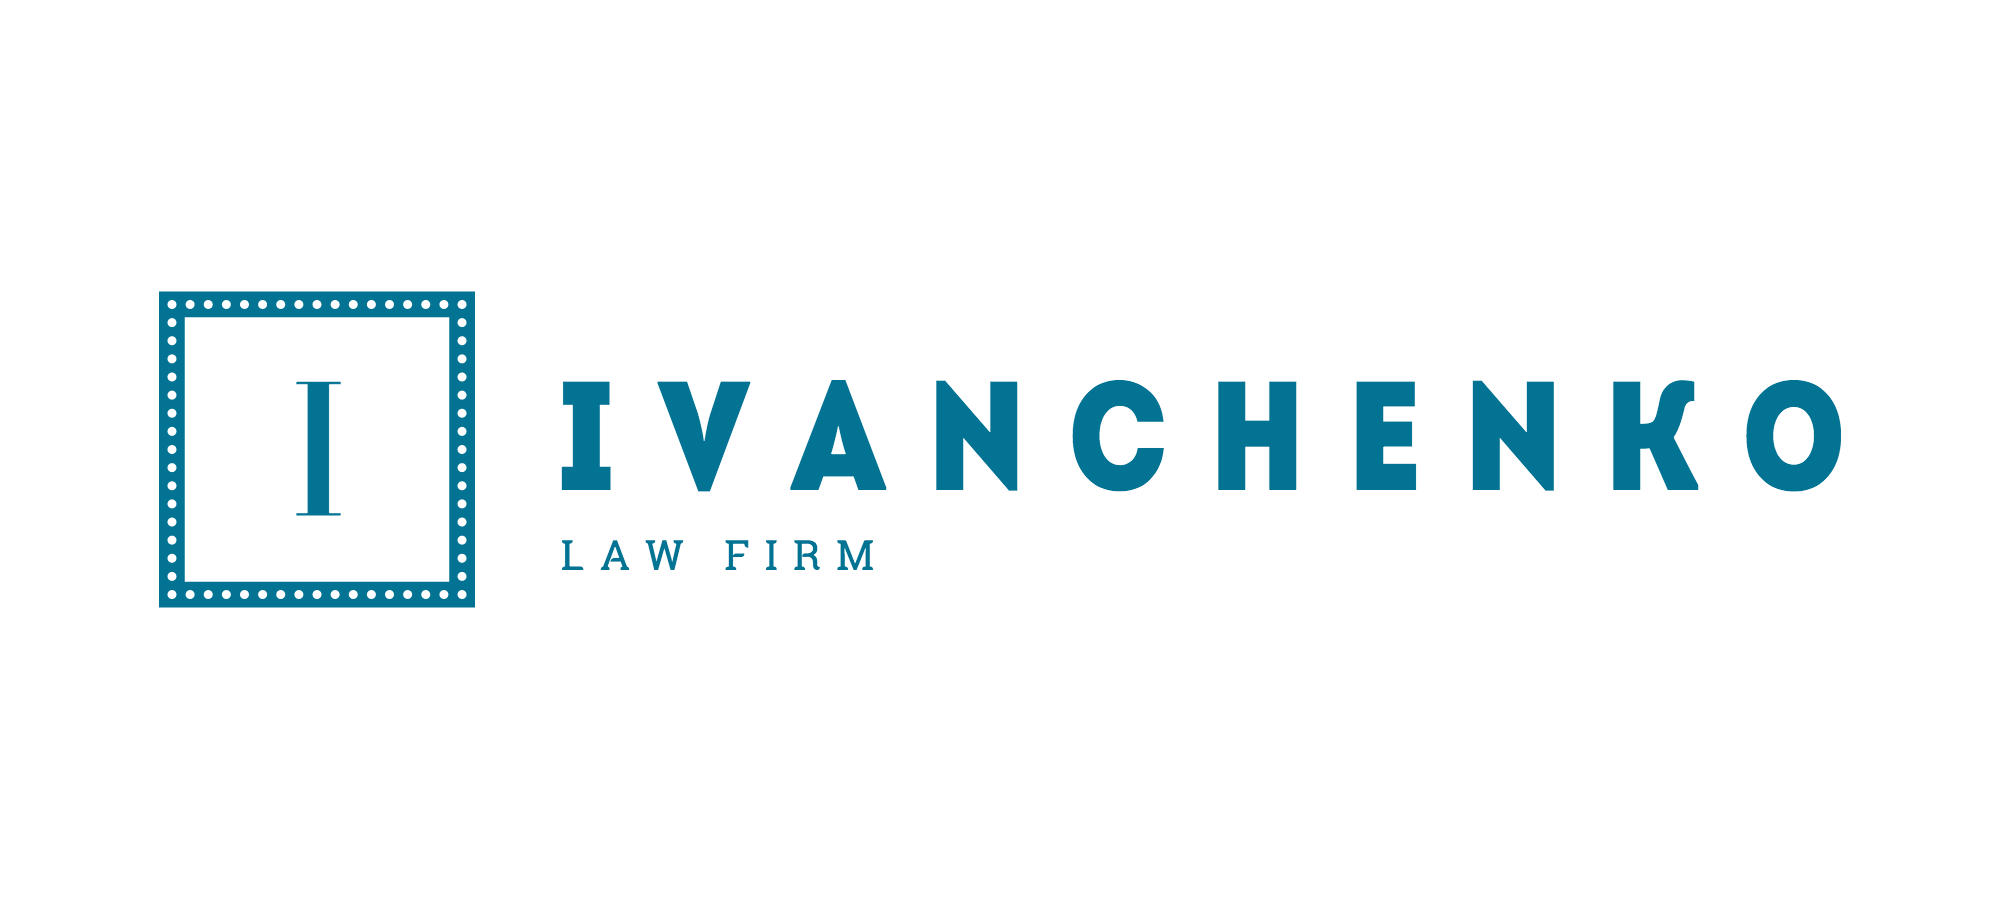 Ivanchenko law firm logo